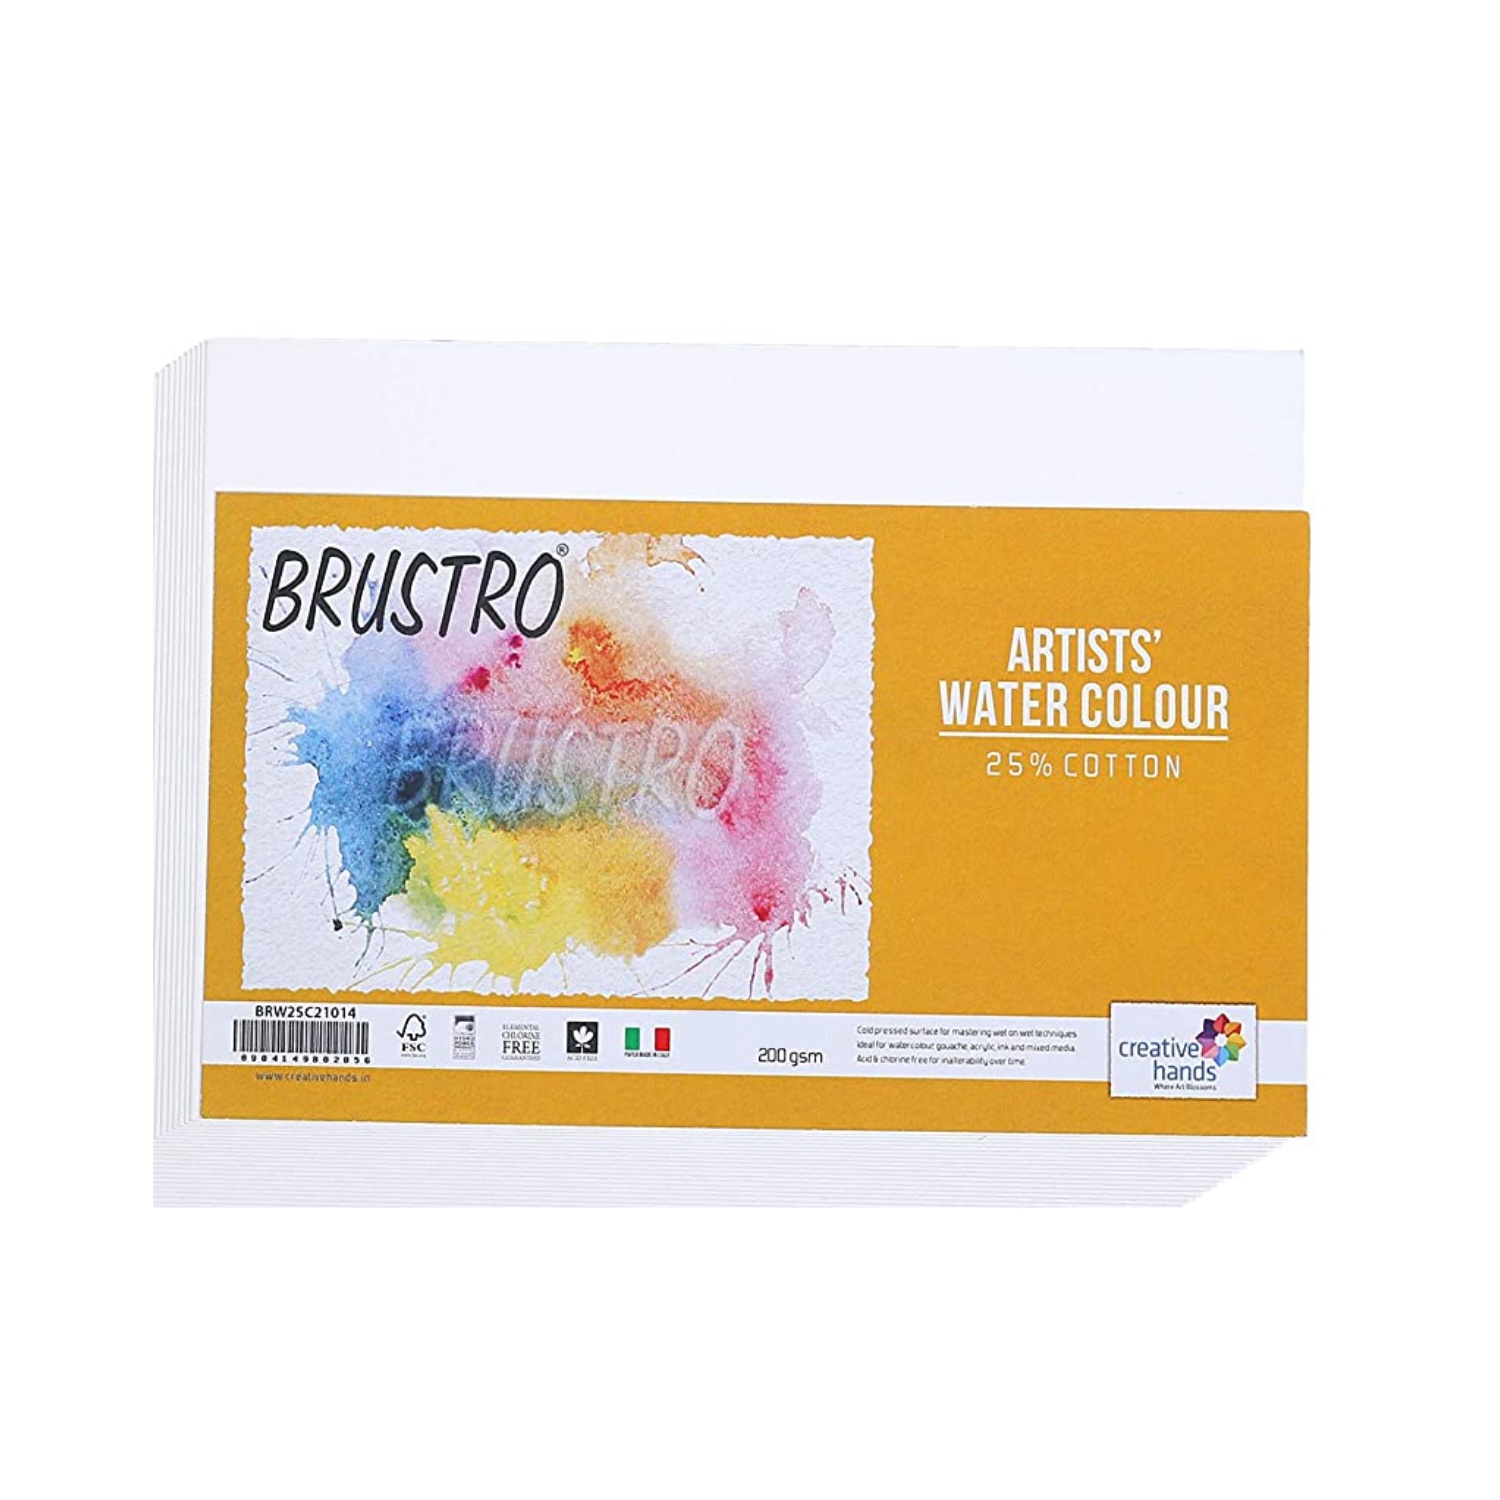 Brustro Artists Watercolour Paper (25% Cotton) - 200 gsm - A5